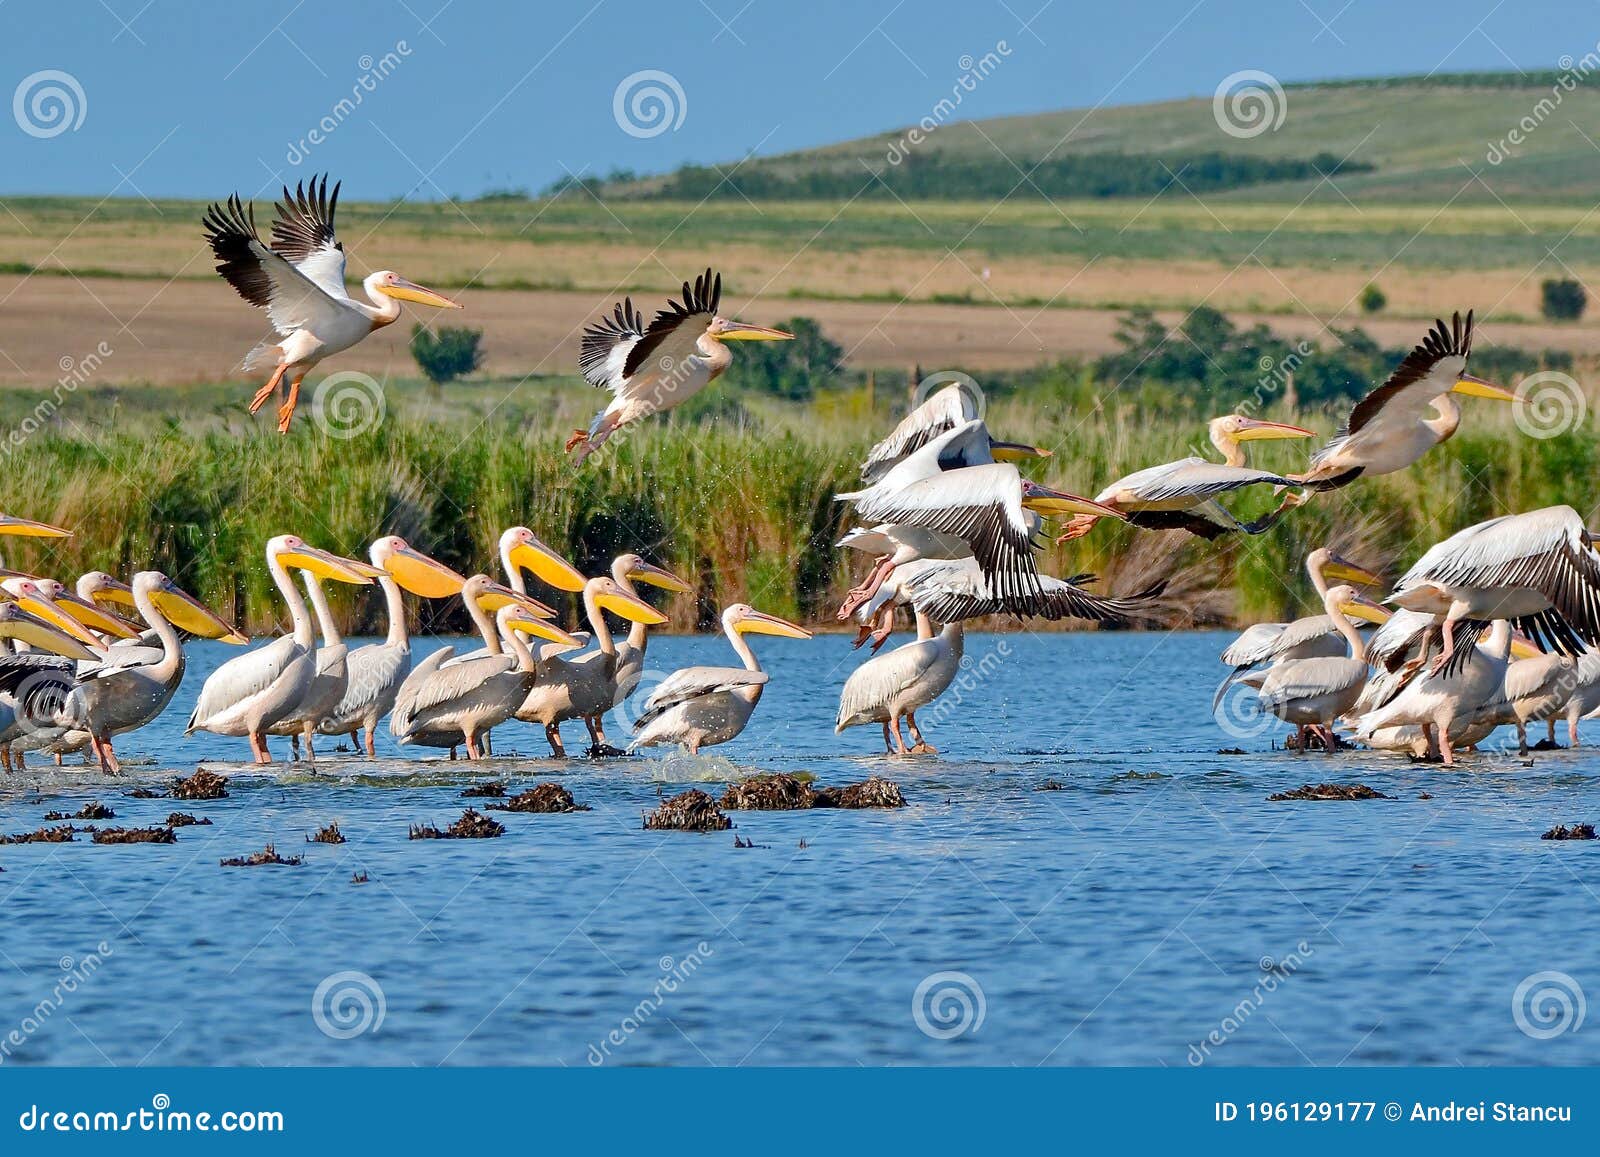 pelicans flying in danube delta, romania